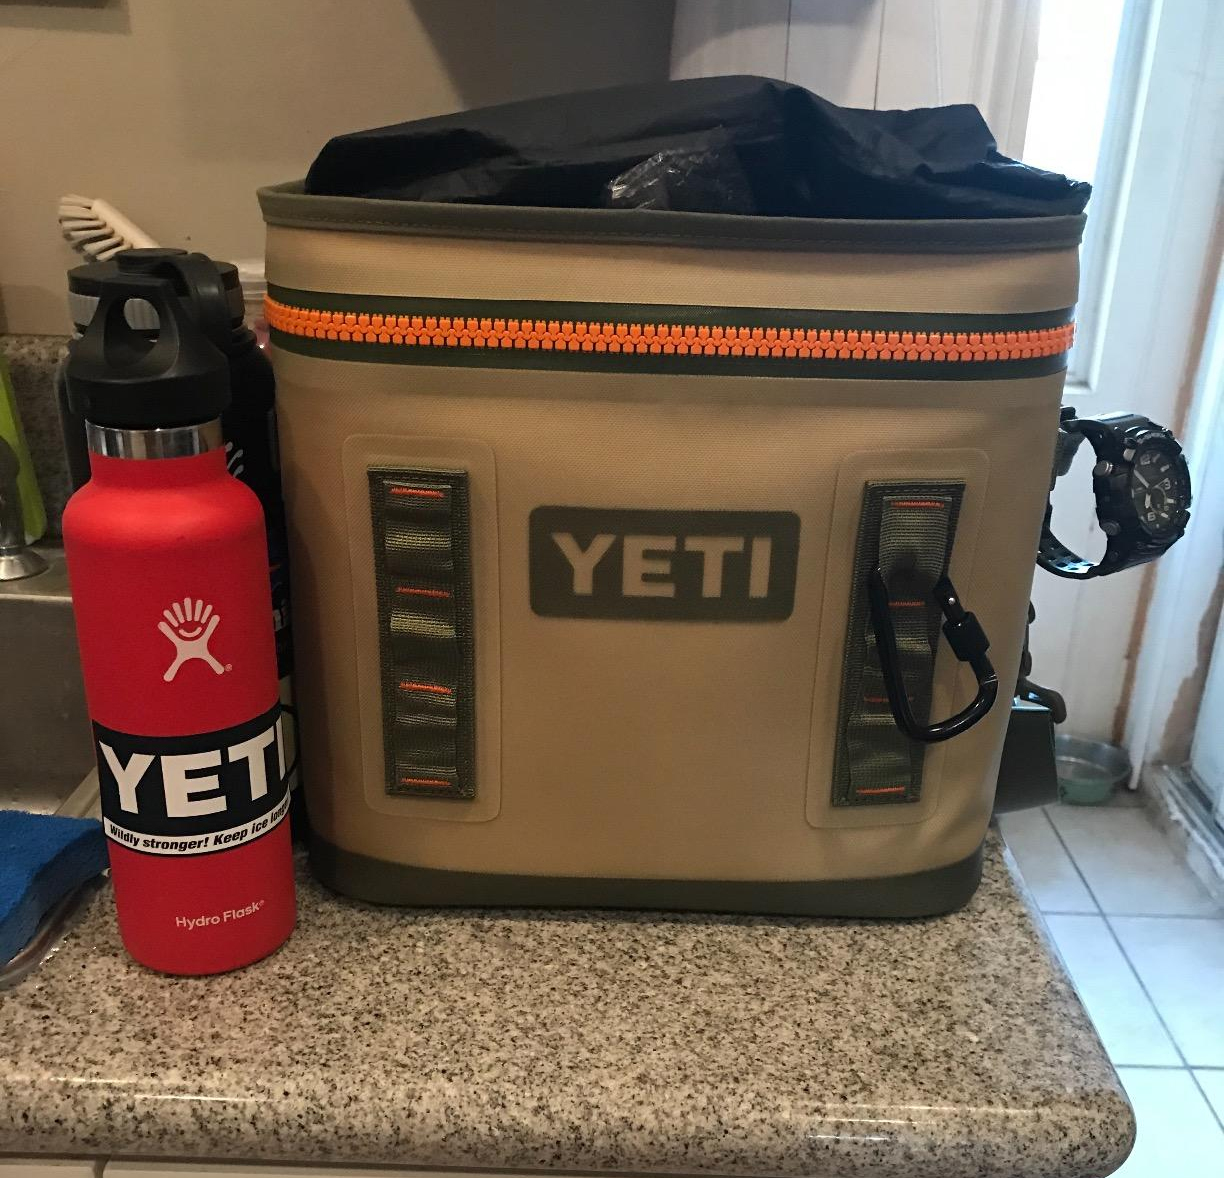 YETI Portable Soft Cooler